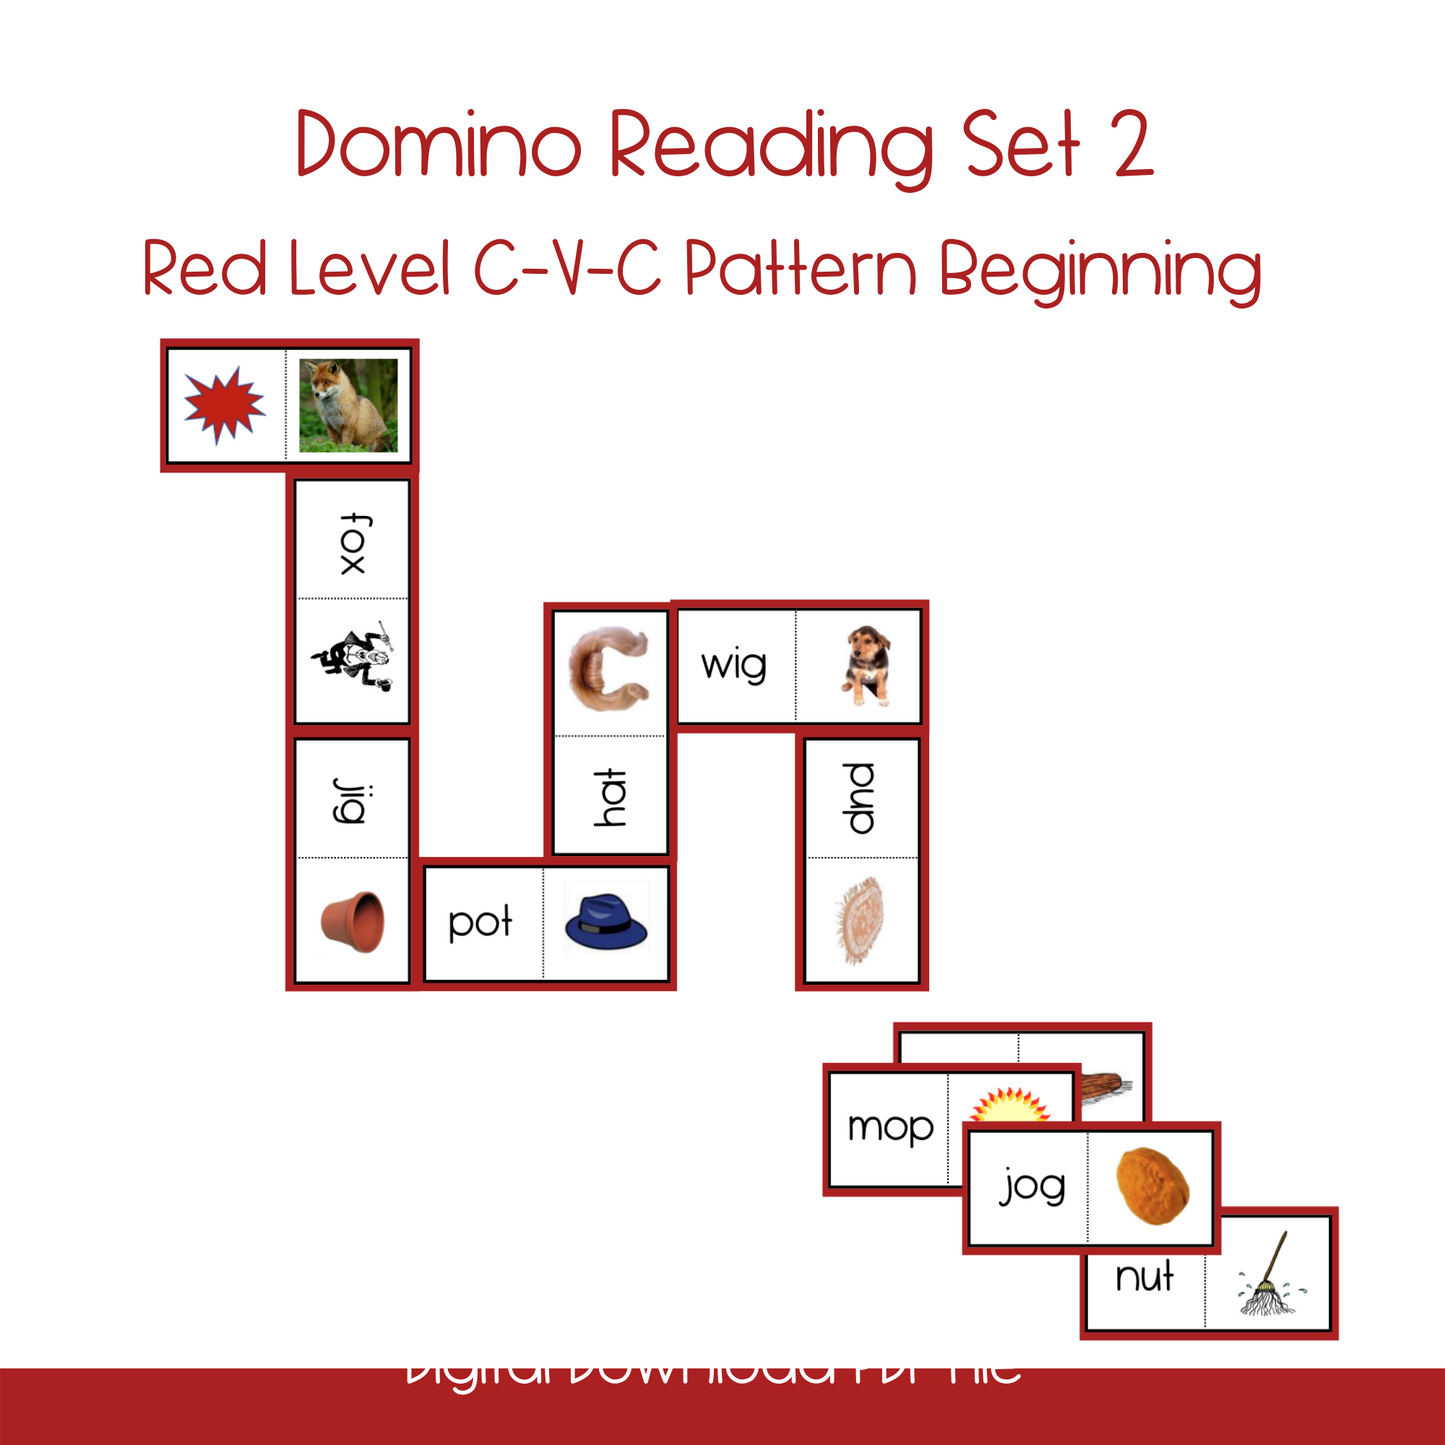 Red Level C-V-C Pattern Beginning Word Domino Reading Sets 1- 4